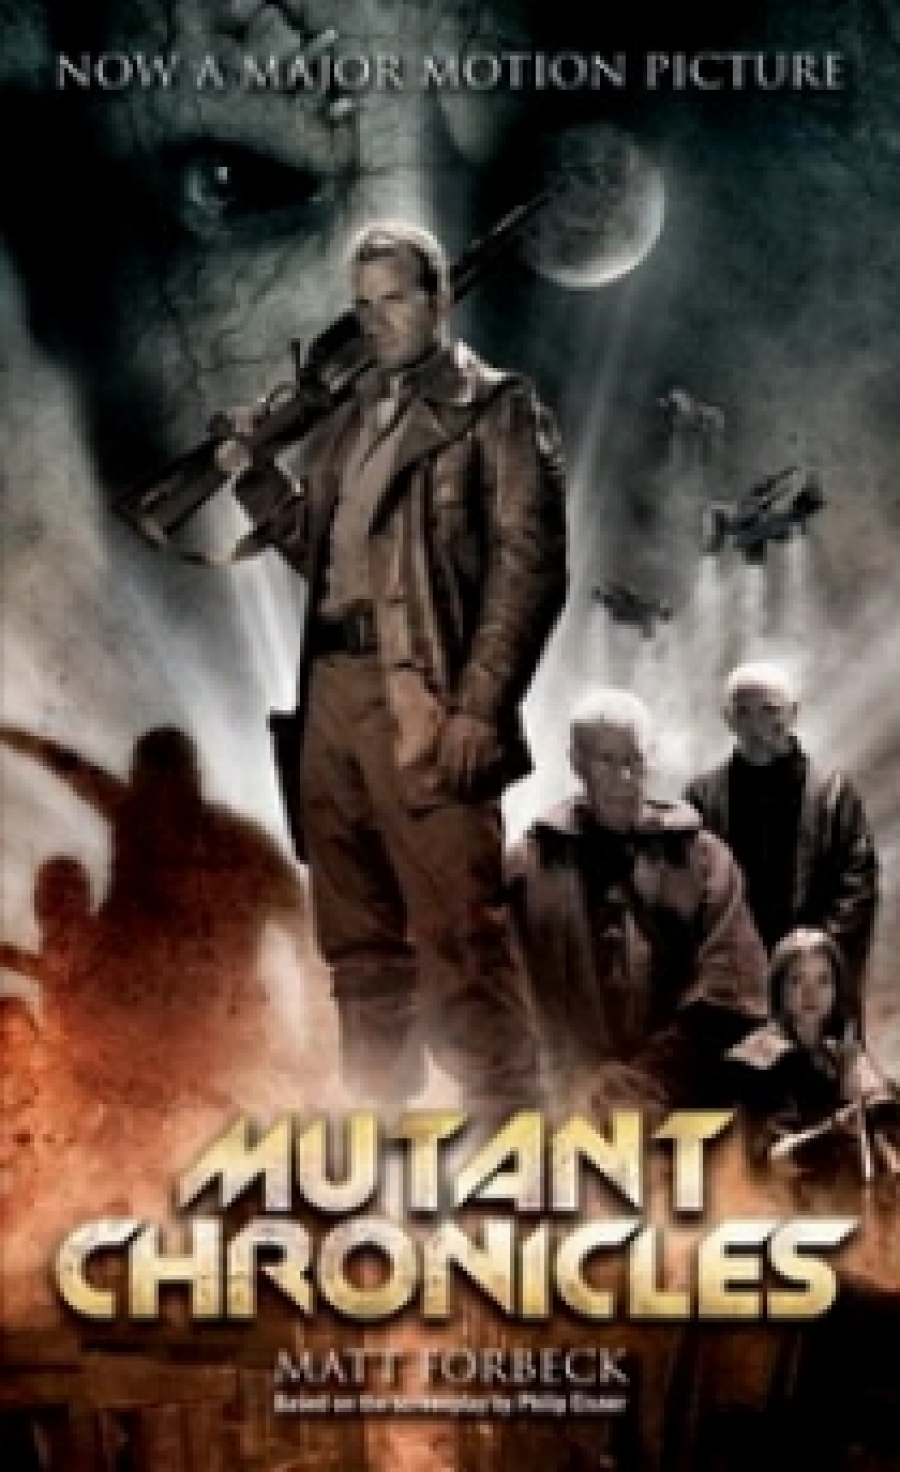 Matt F. Mutant Chronicles 